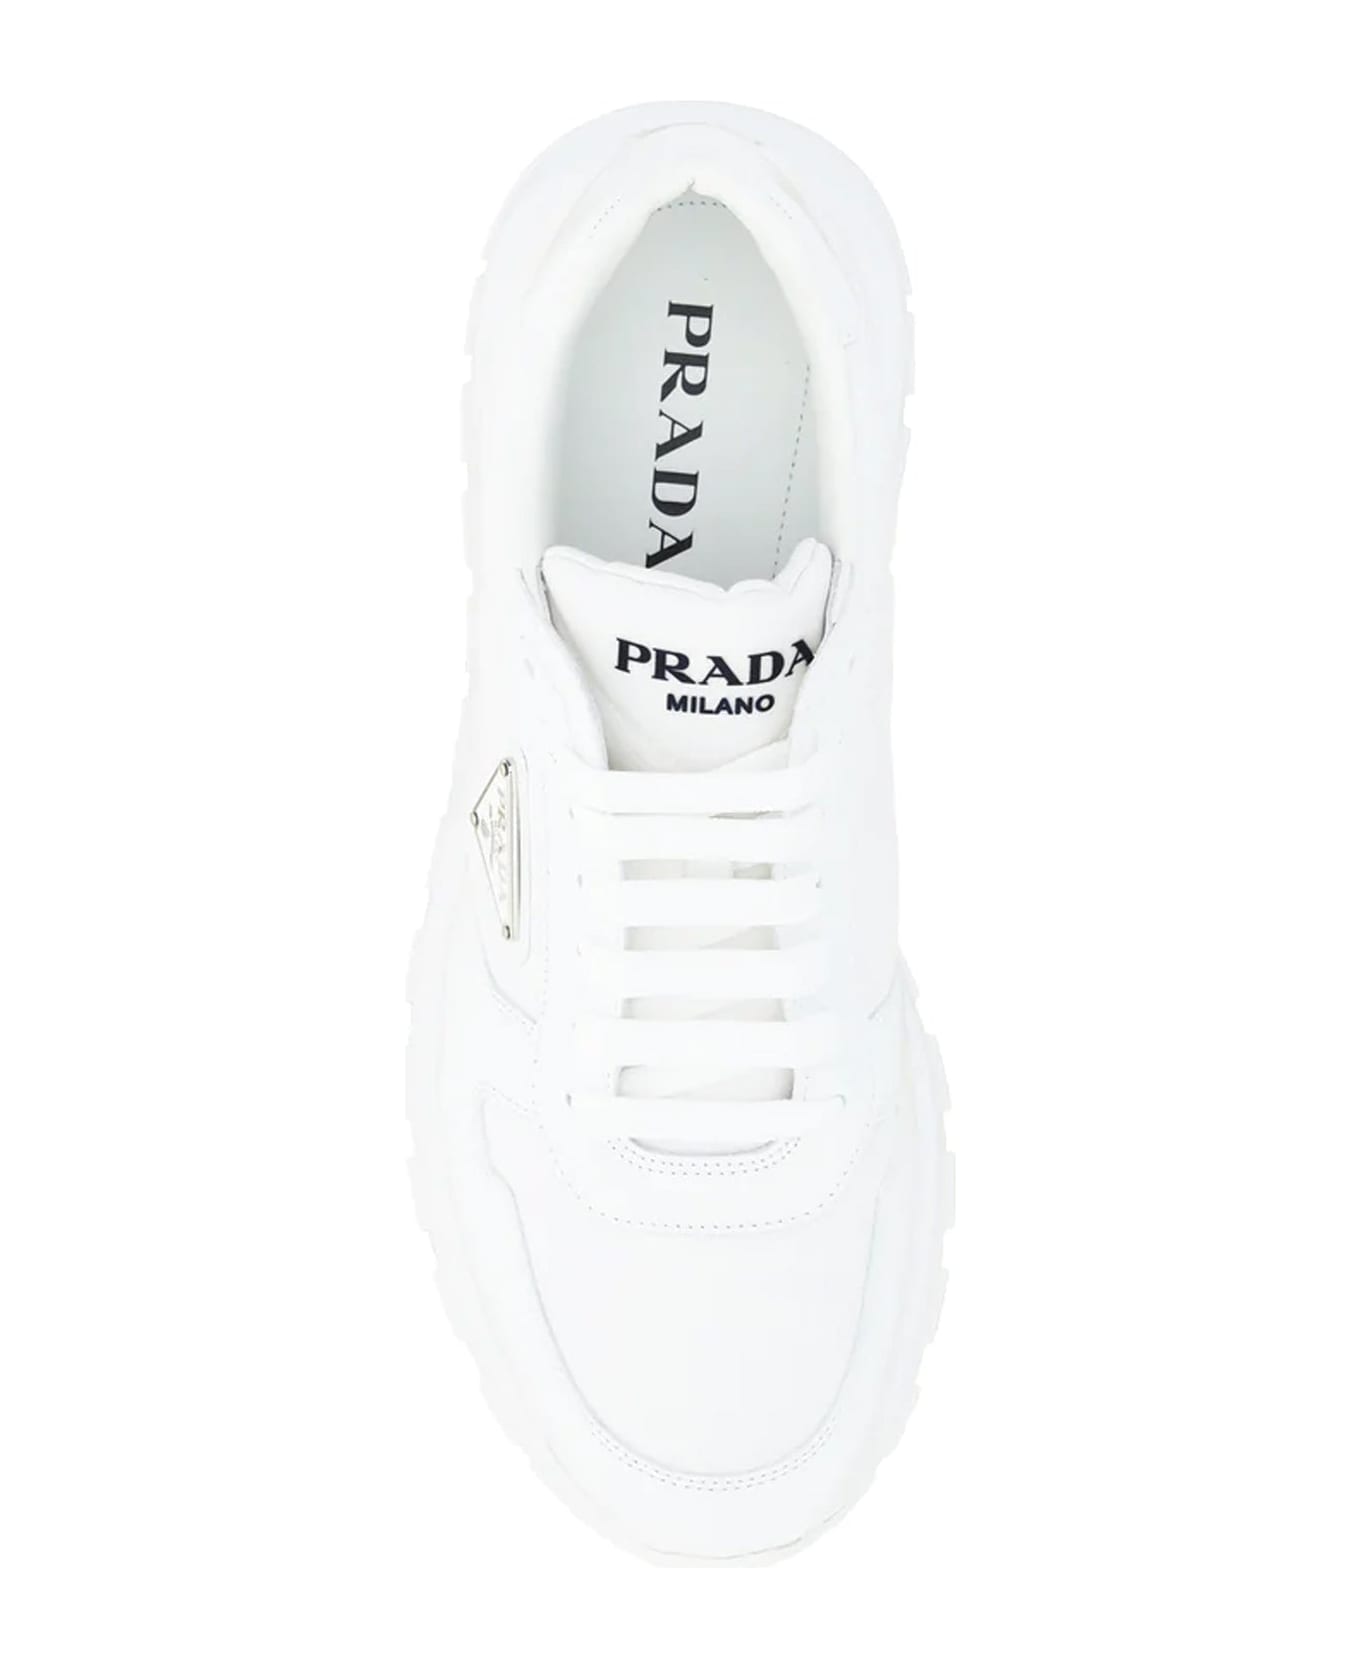 Prada Prax 01 Sneakers - White